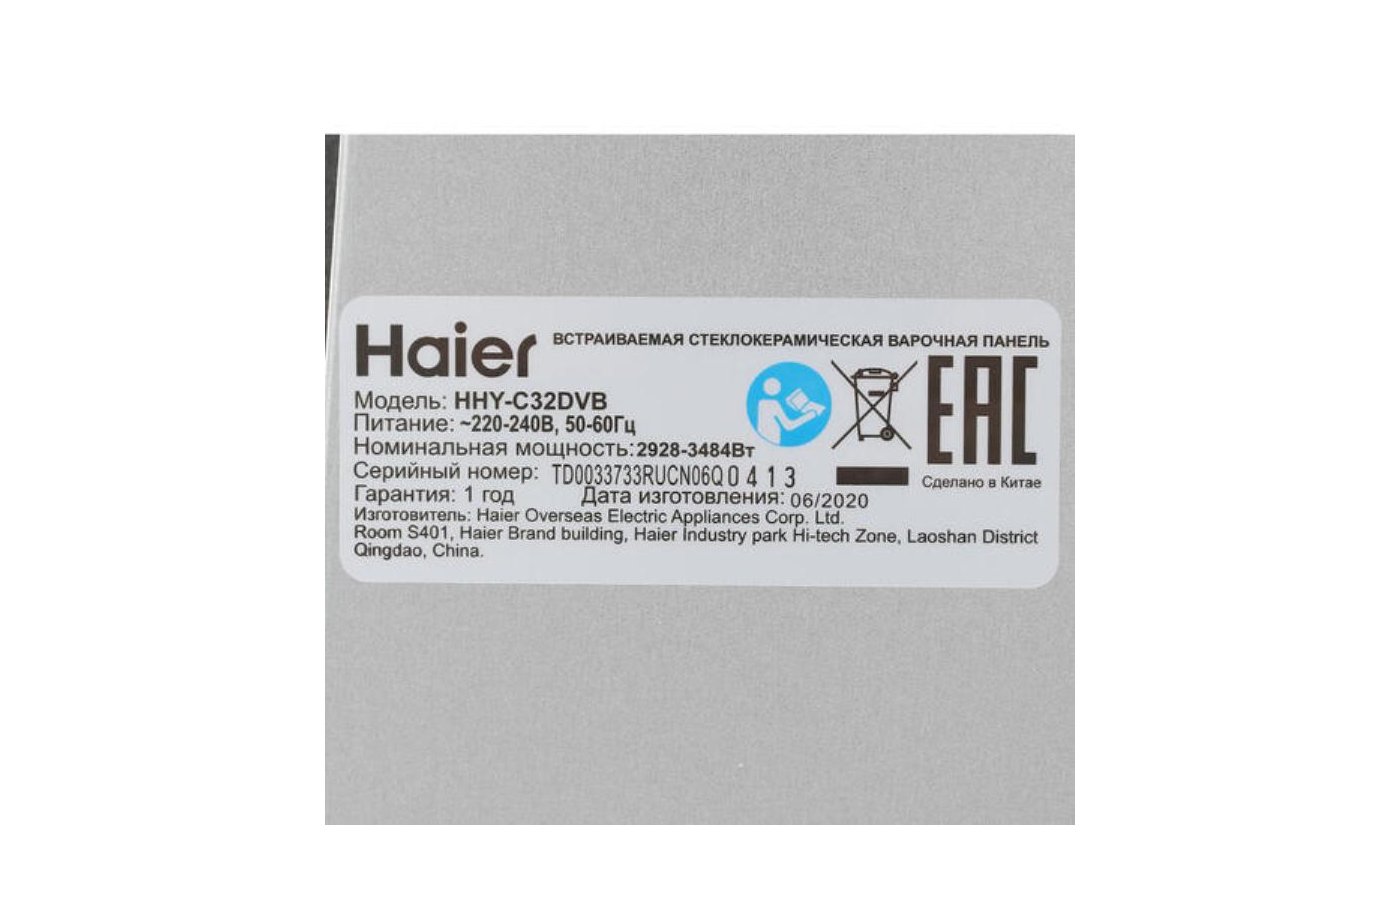 Haier hhy c32rvb. Варочная панель Haier HHY-c32dvb схема. Хайер HHY c32dvb. Варочная панель Haier HHY-c32dvb. Электрическая варочная панель Haier HHY-c32dvb черный.